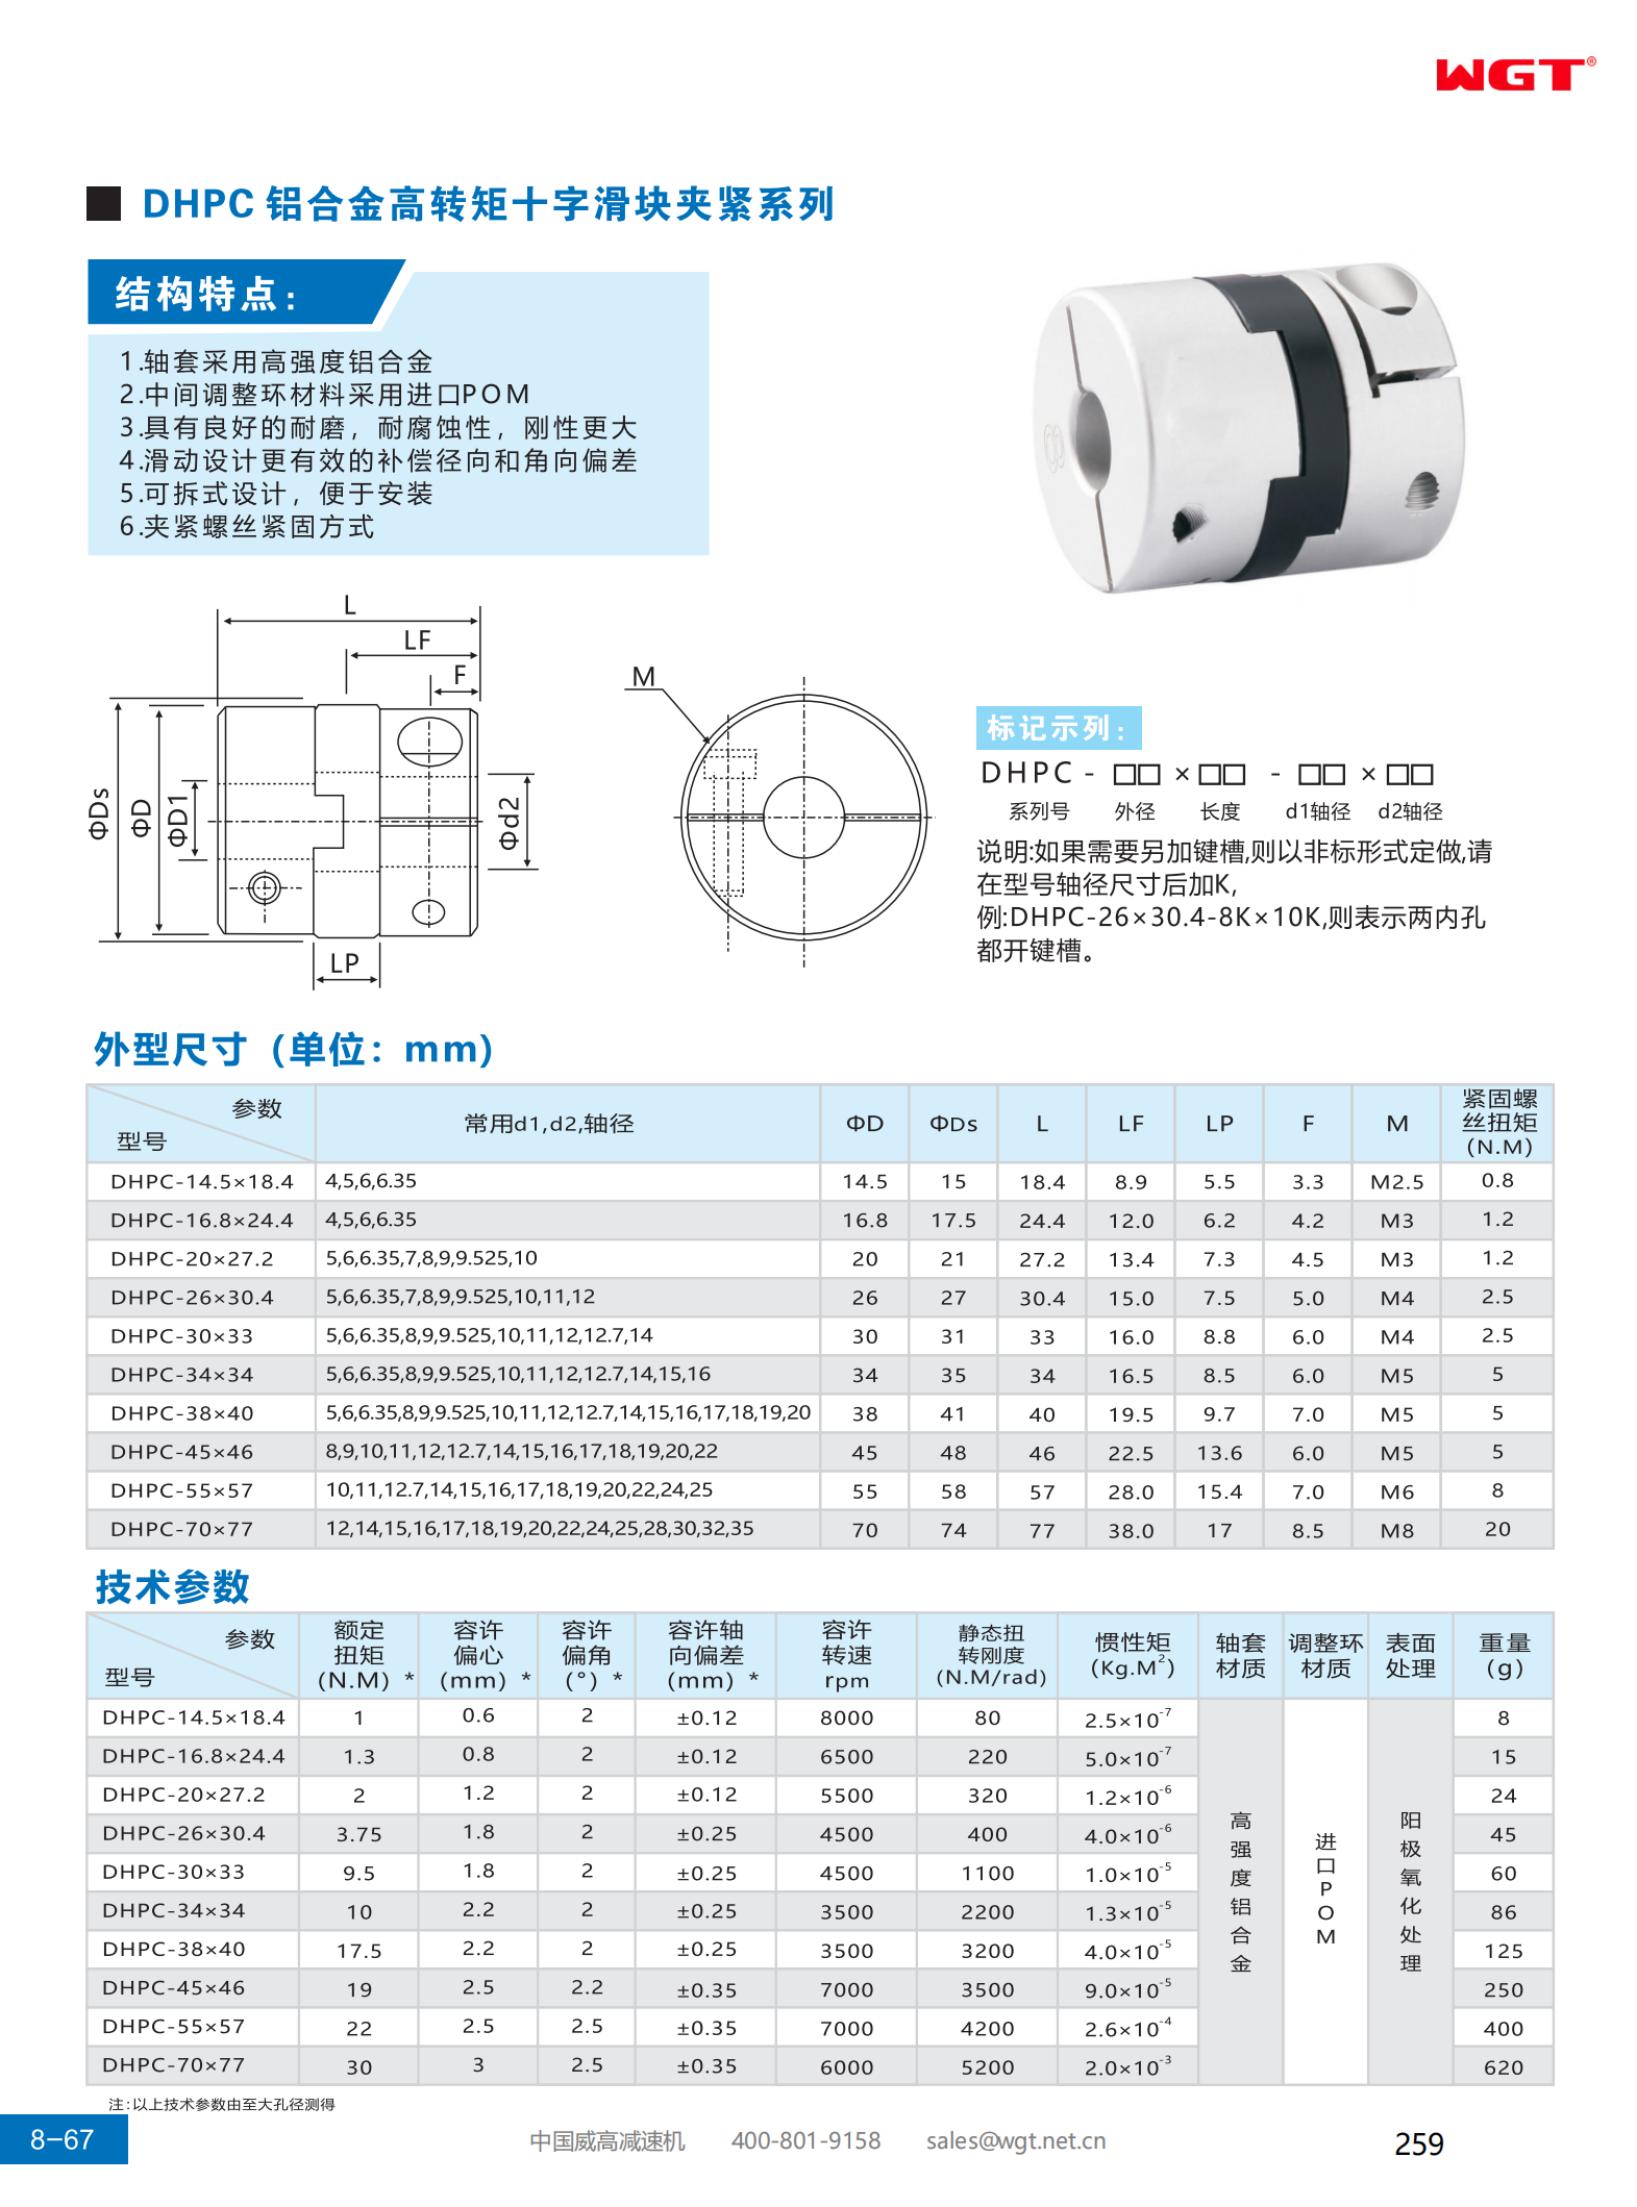 DHPC aluminum alloy high torque cross slider clamping series